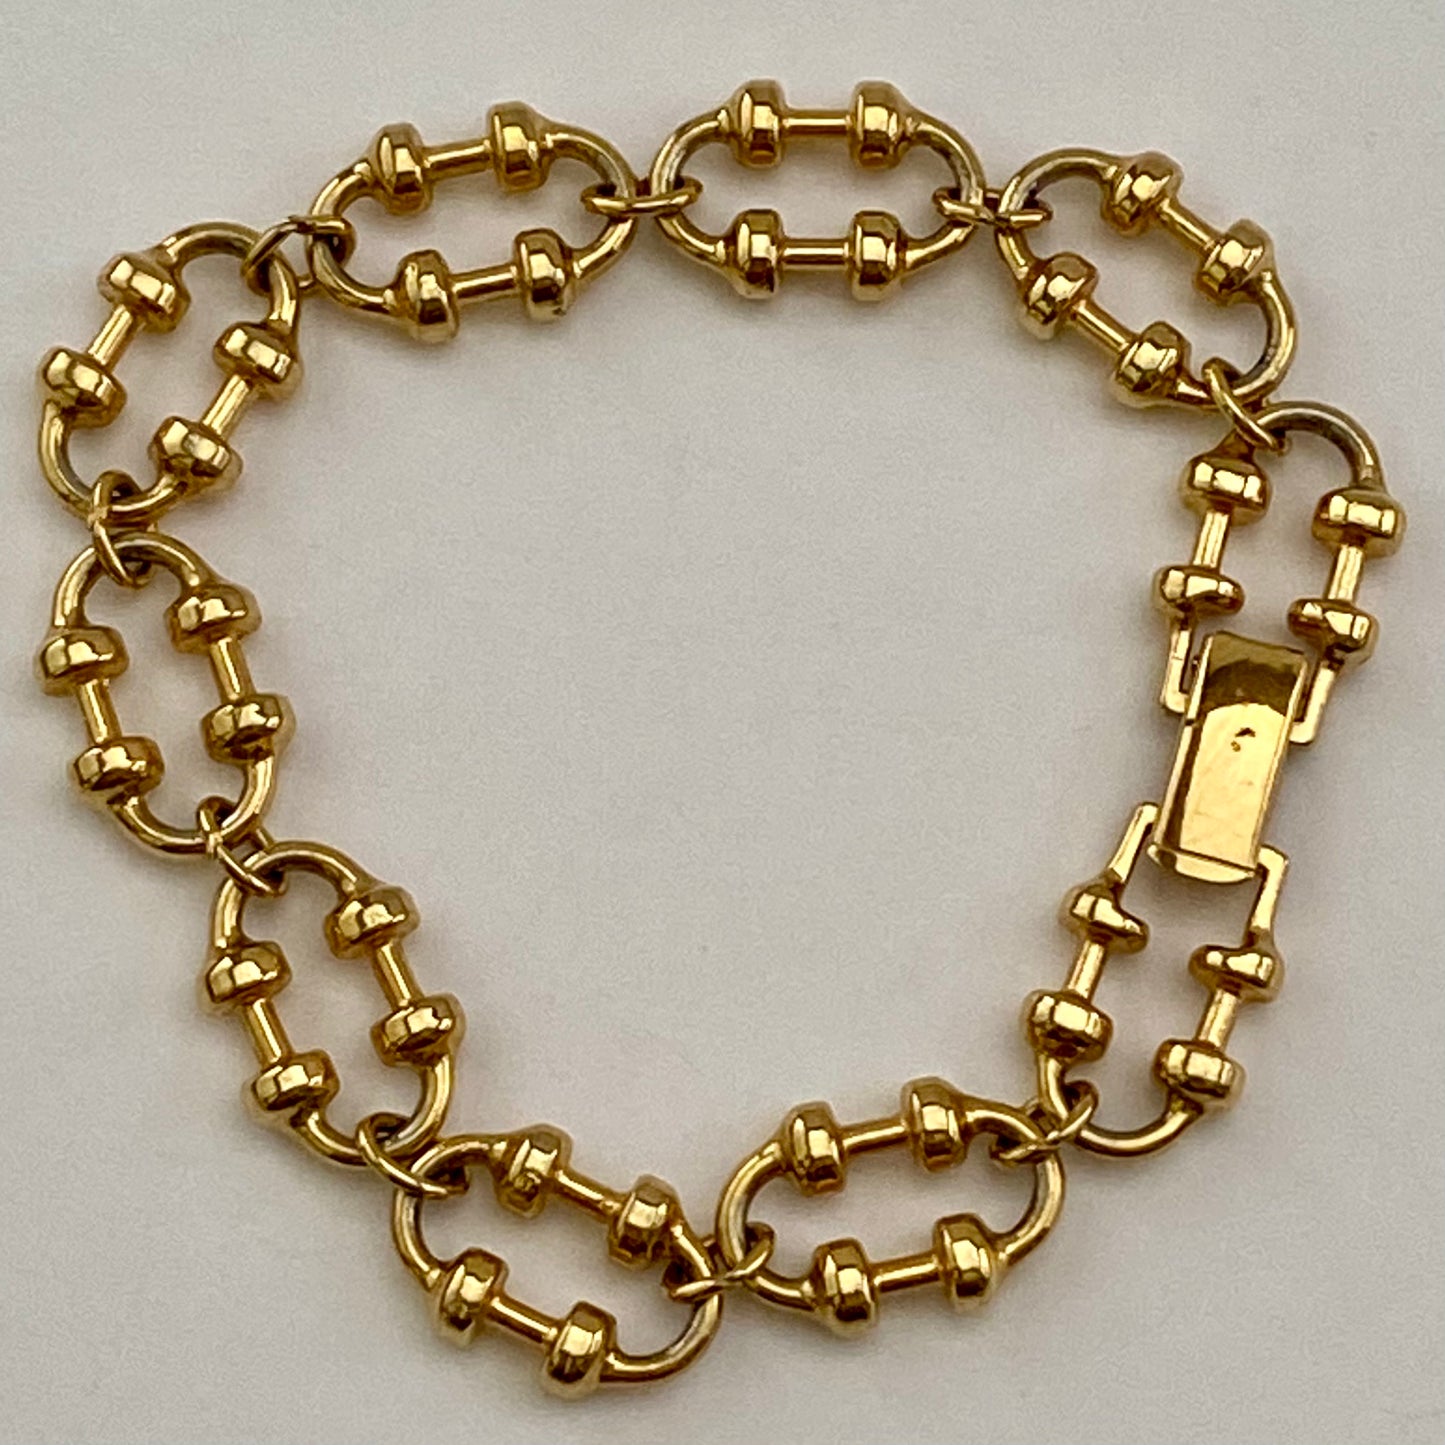 1978 Avon Versatile Links Bracelet